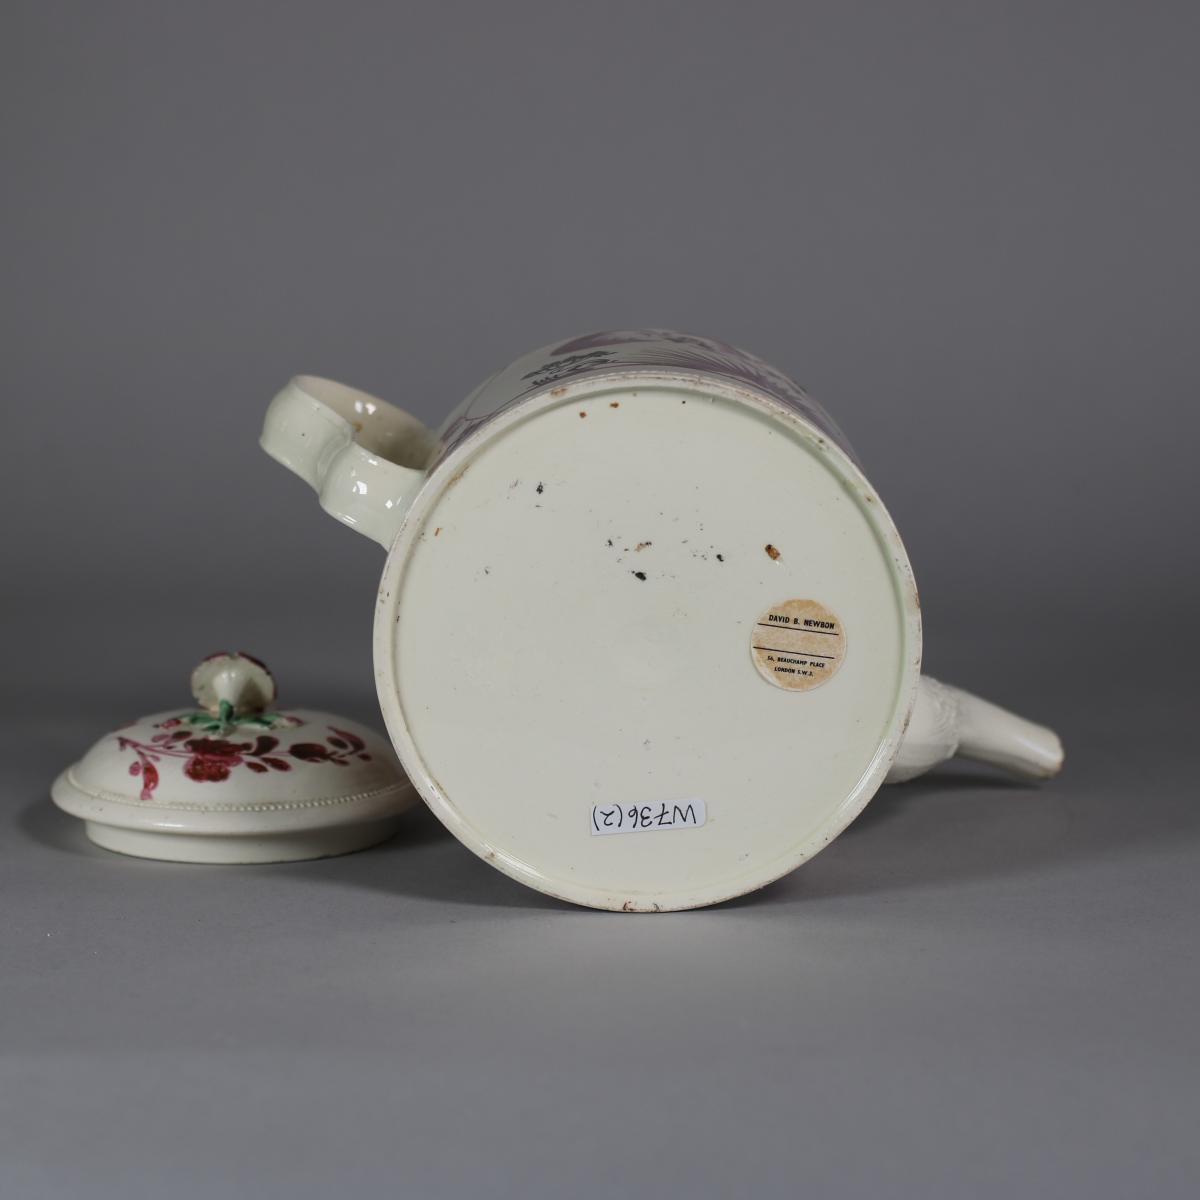 Base and lid of Leeds creamware teapot